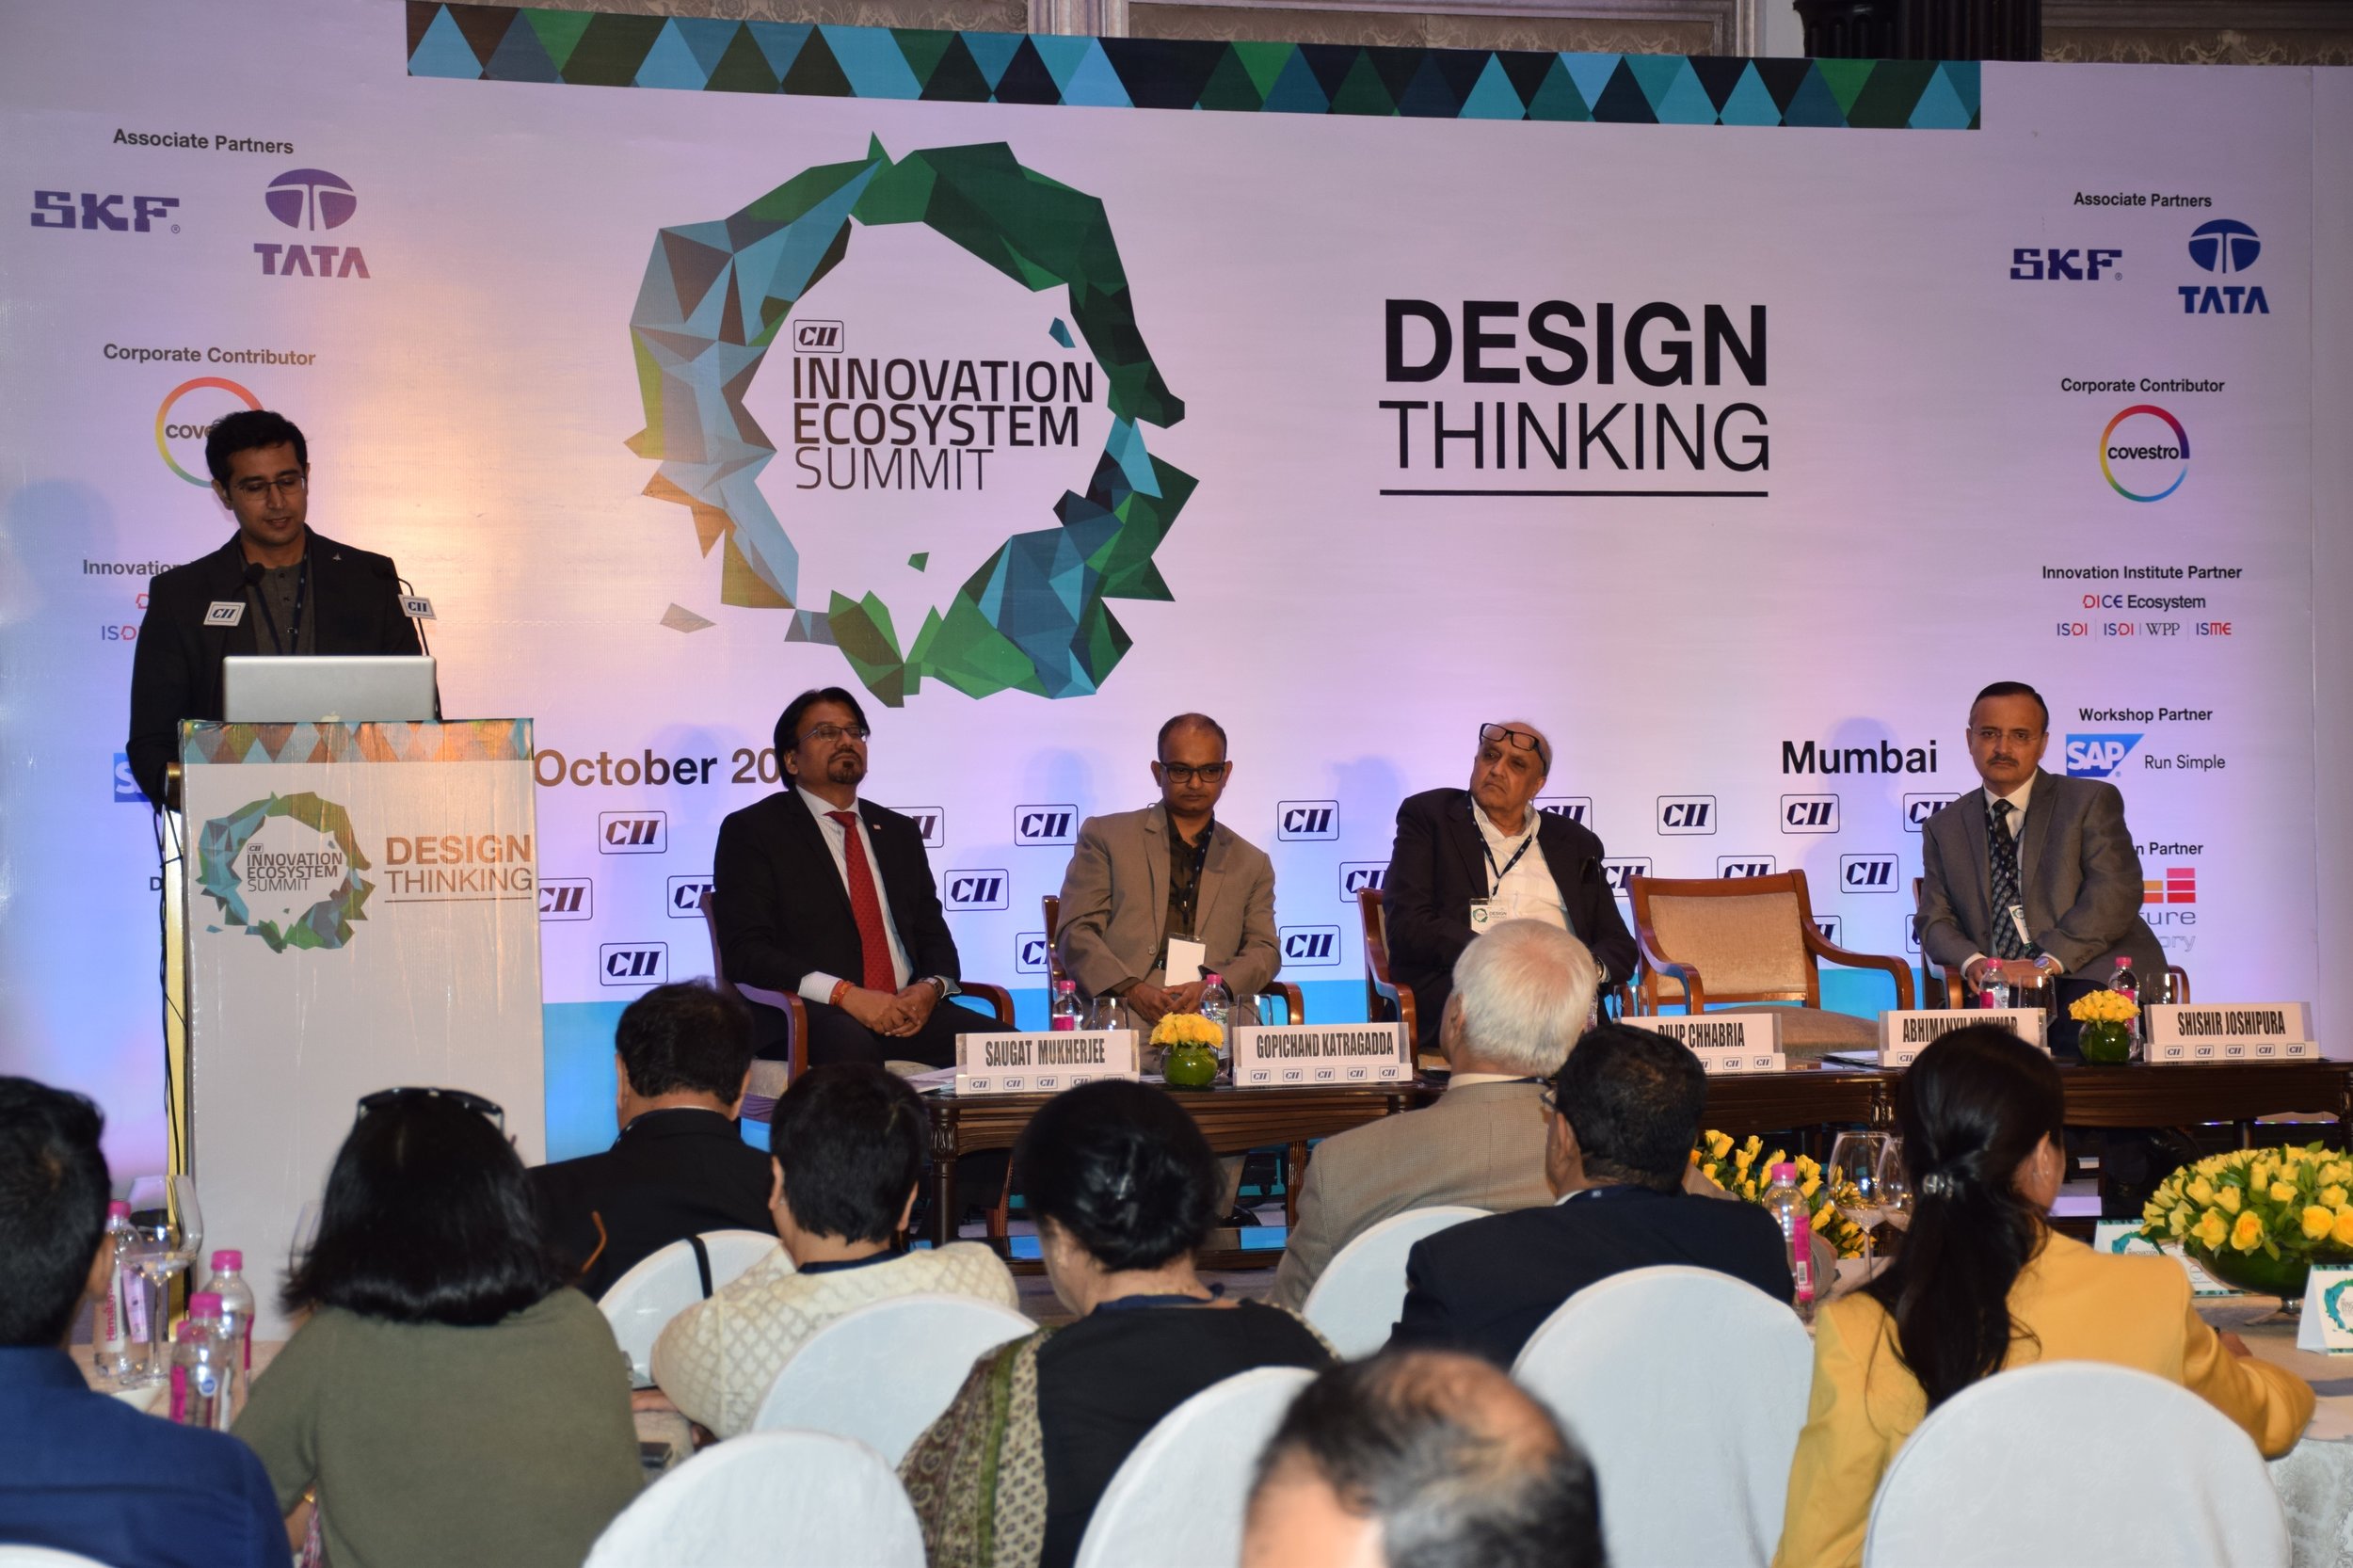 CII Innovation Ecosystem Summit 2017 speaker - Abhimanyu Nohwar - 4.jpg